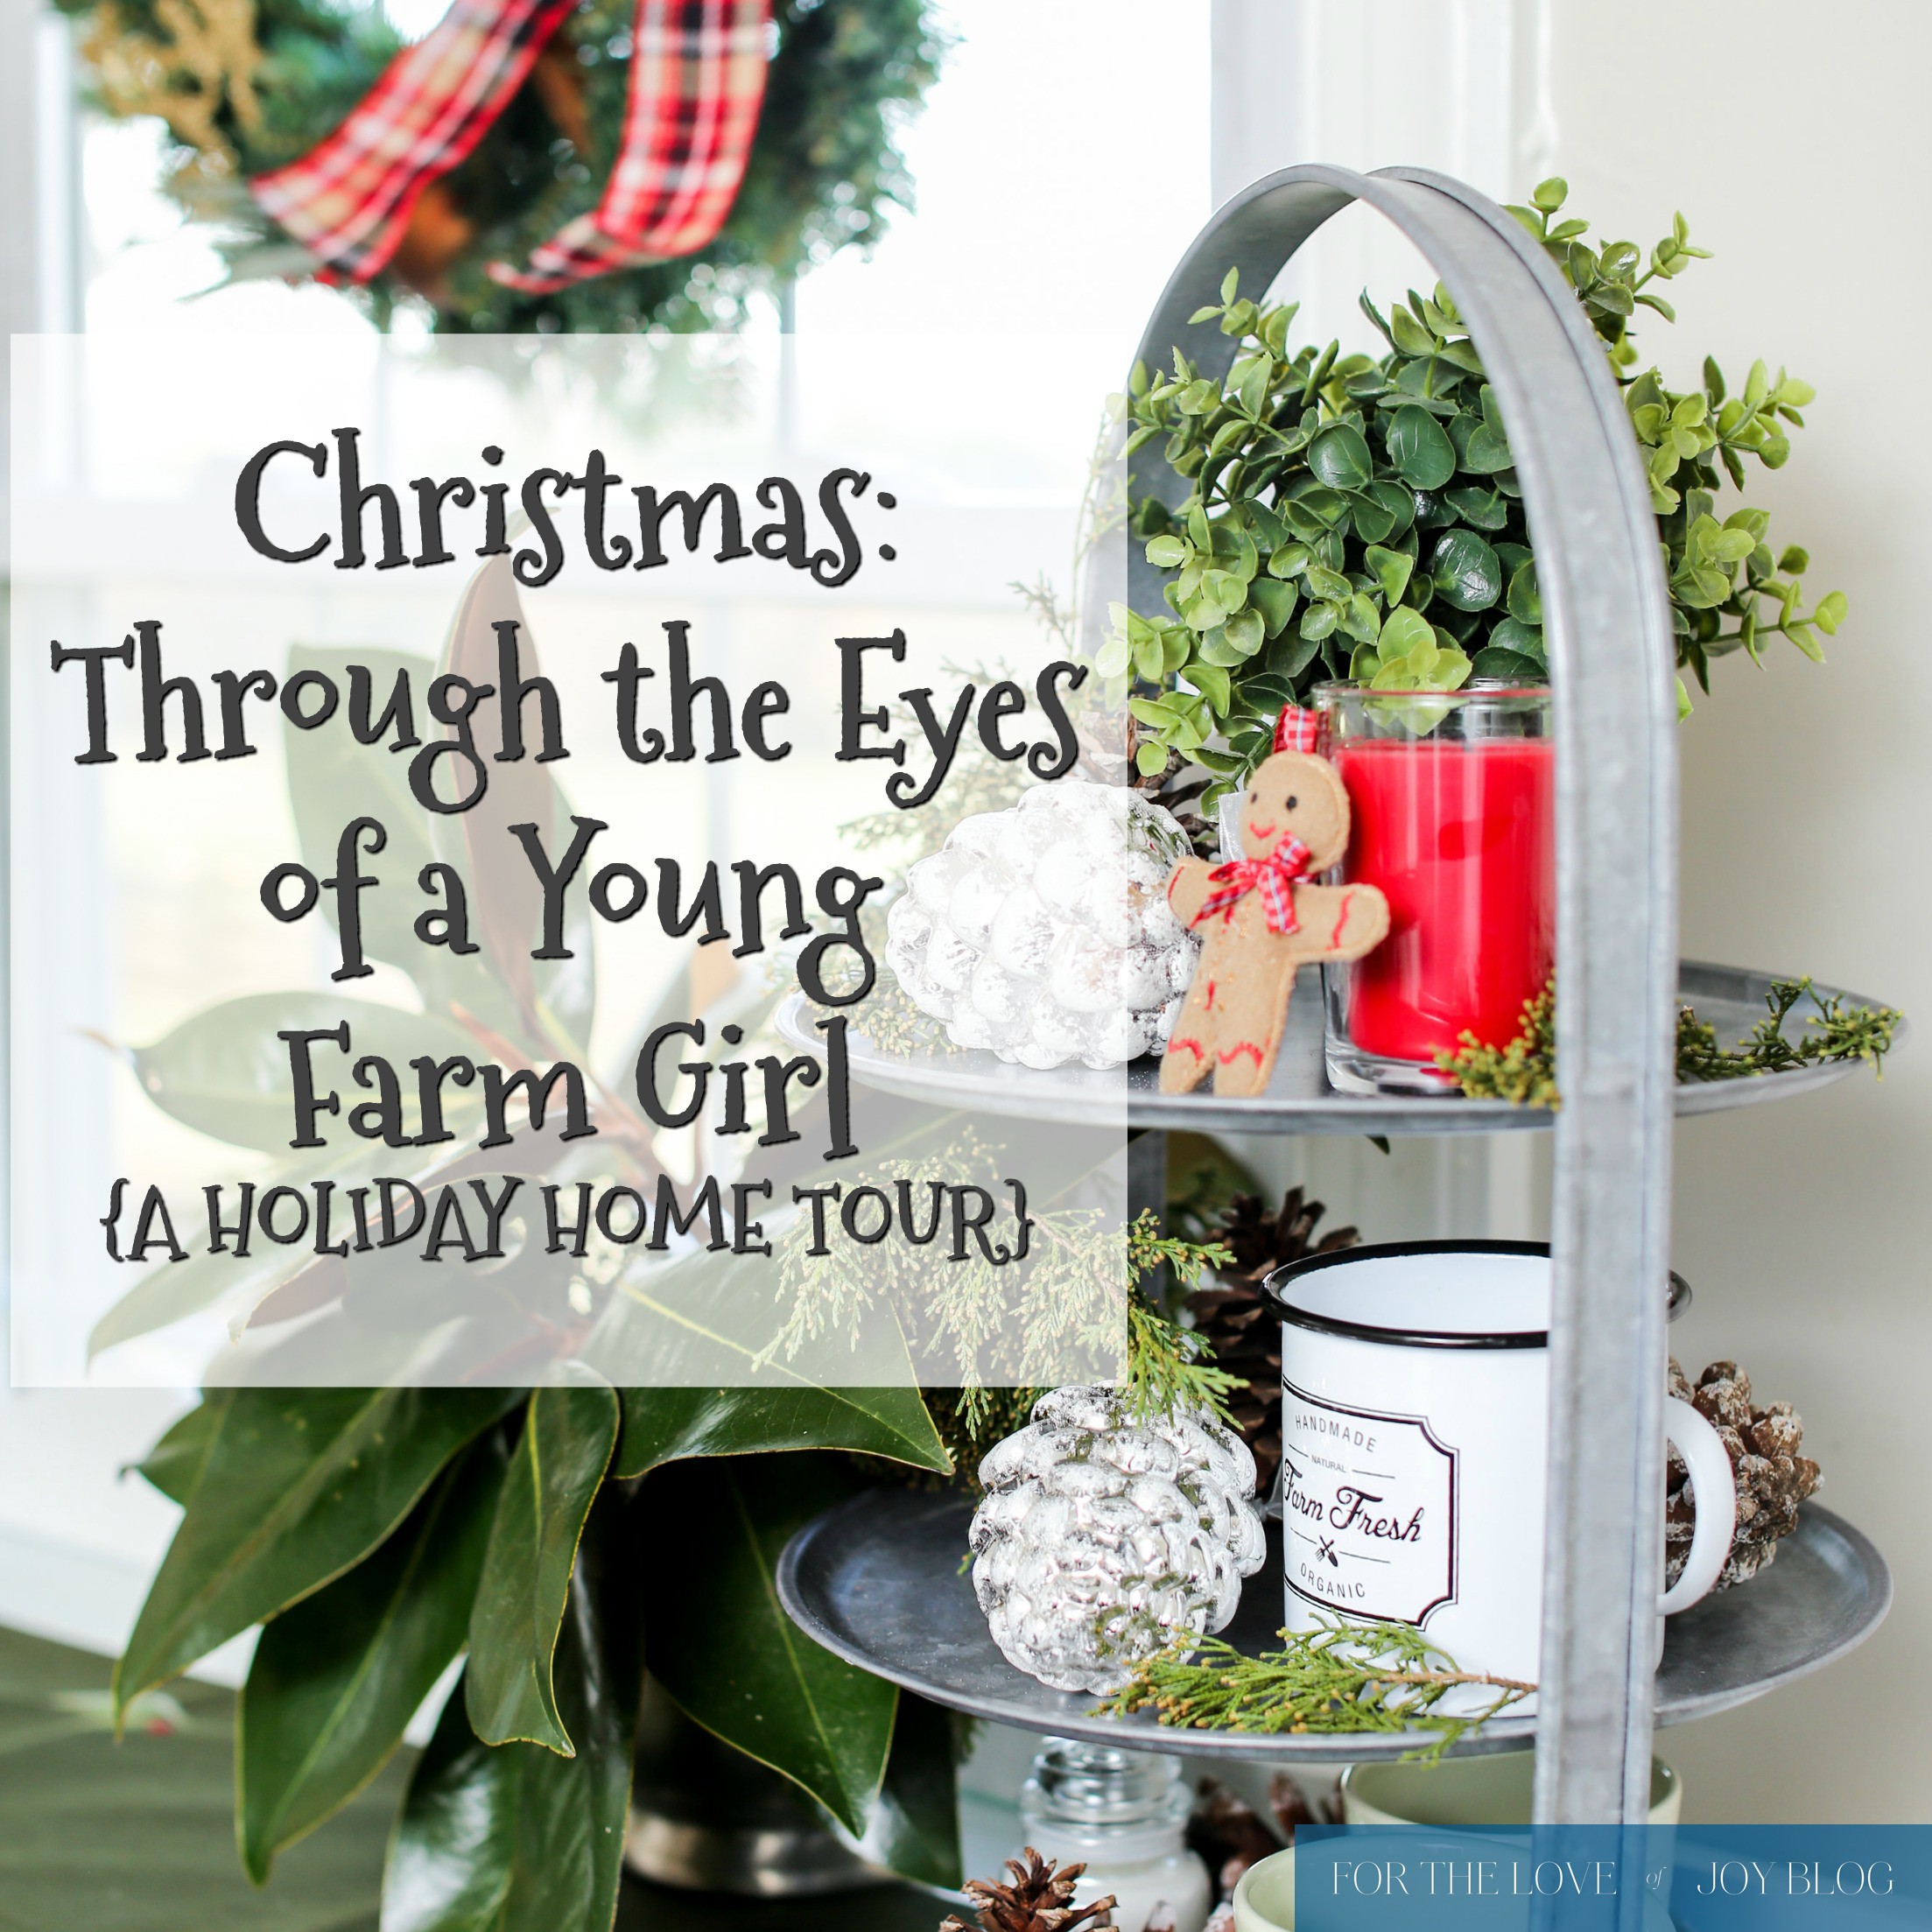 Christmas: Through the Eyes of a Young Farm Girl